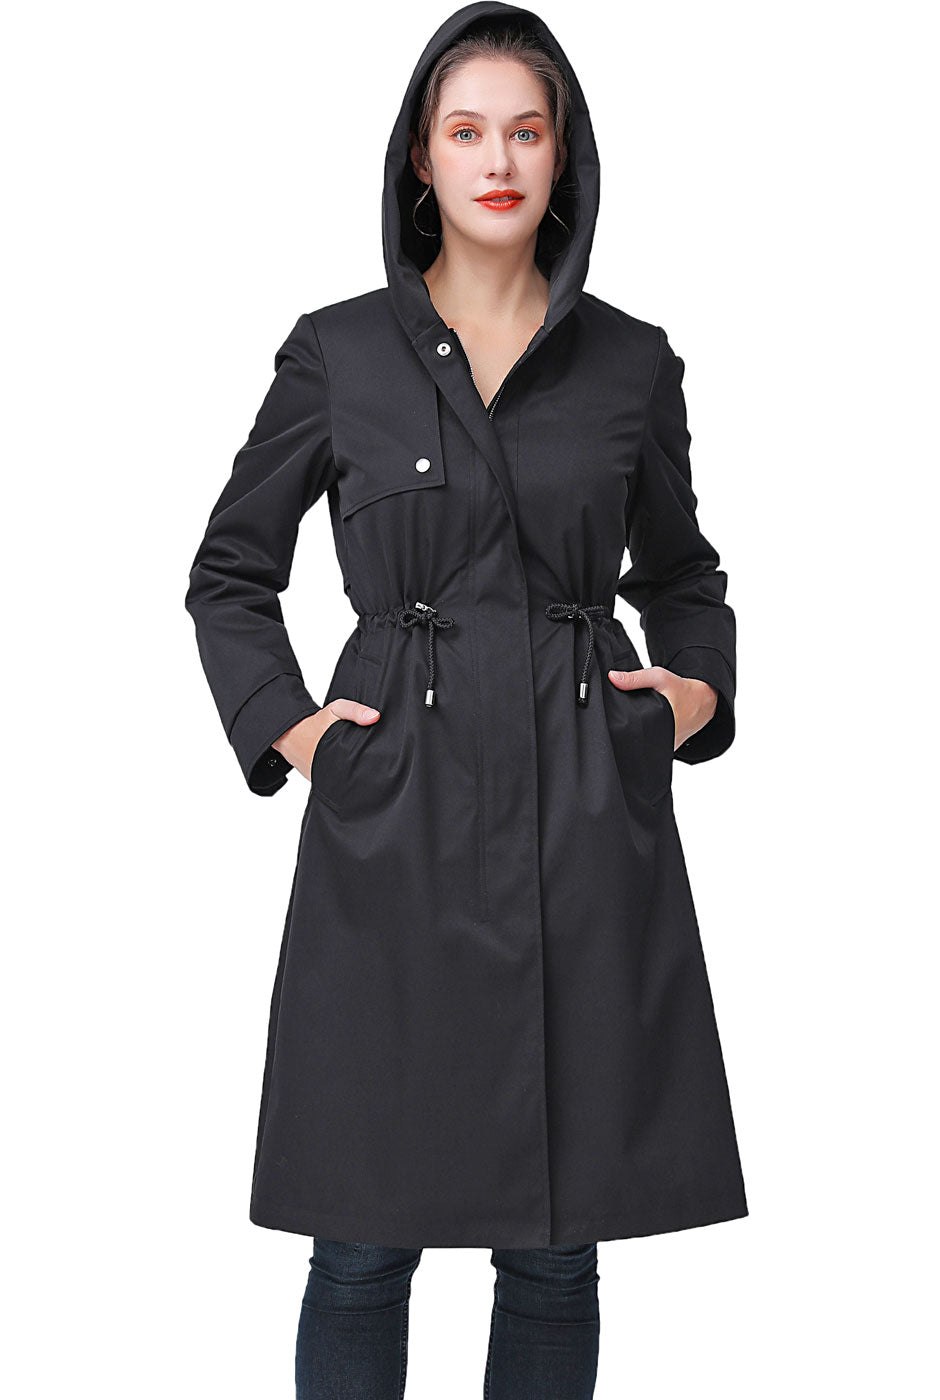 BGSD Women Riley Waterproof Hooded Zip-Out Lined Coat